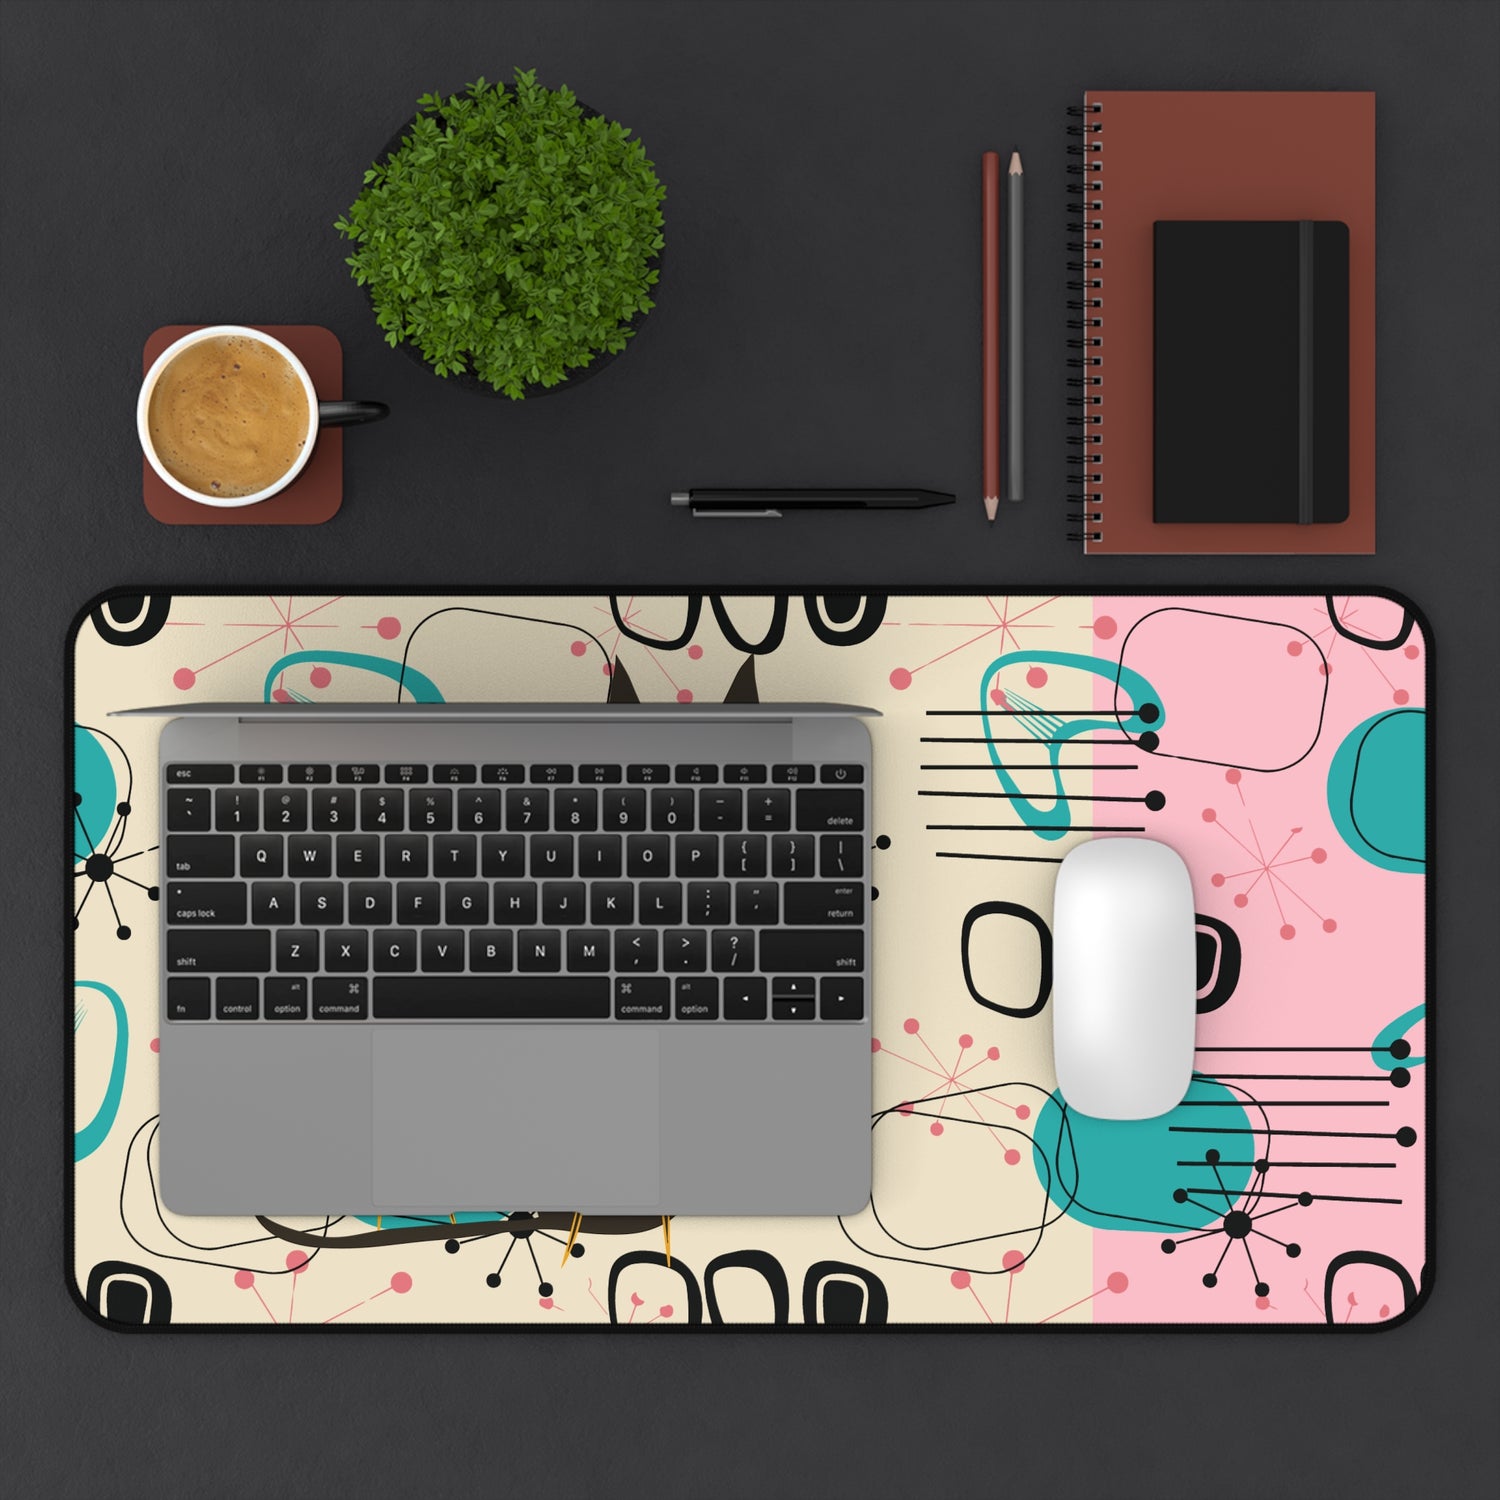 Retro Atomic Cat Mid Century Modern Desk Mat, MCM Pink, Turquoise Black Geometric Starburst Office Accessory